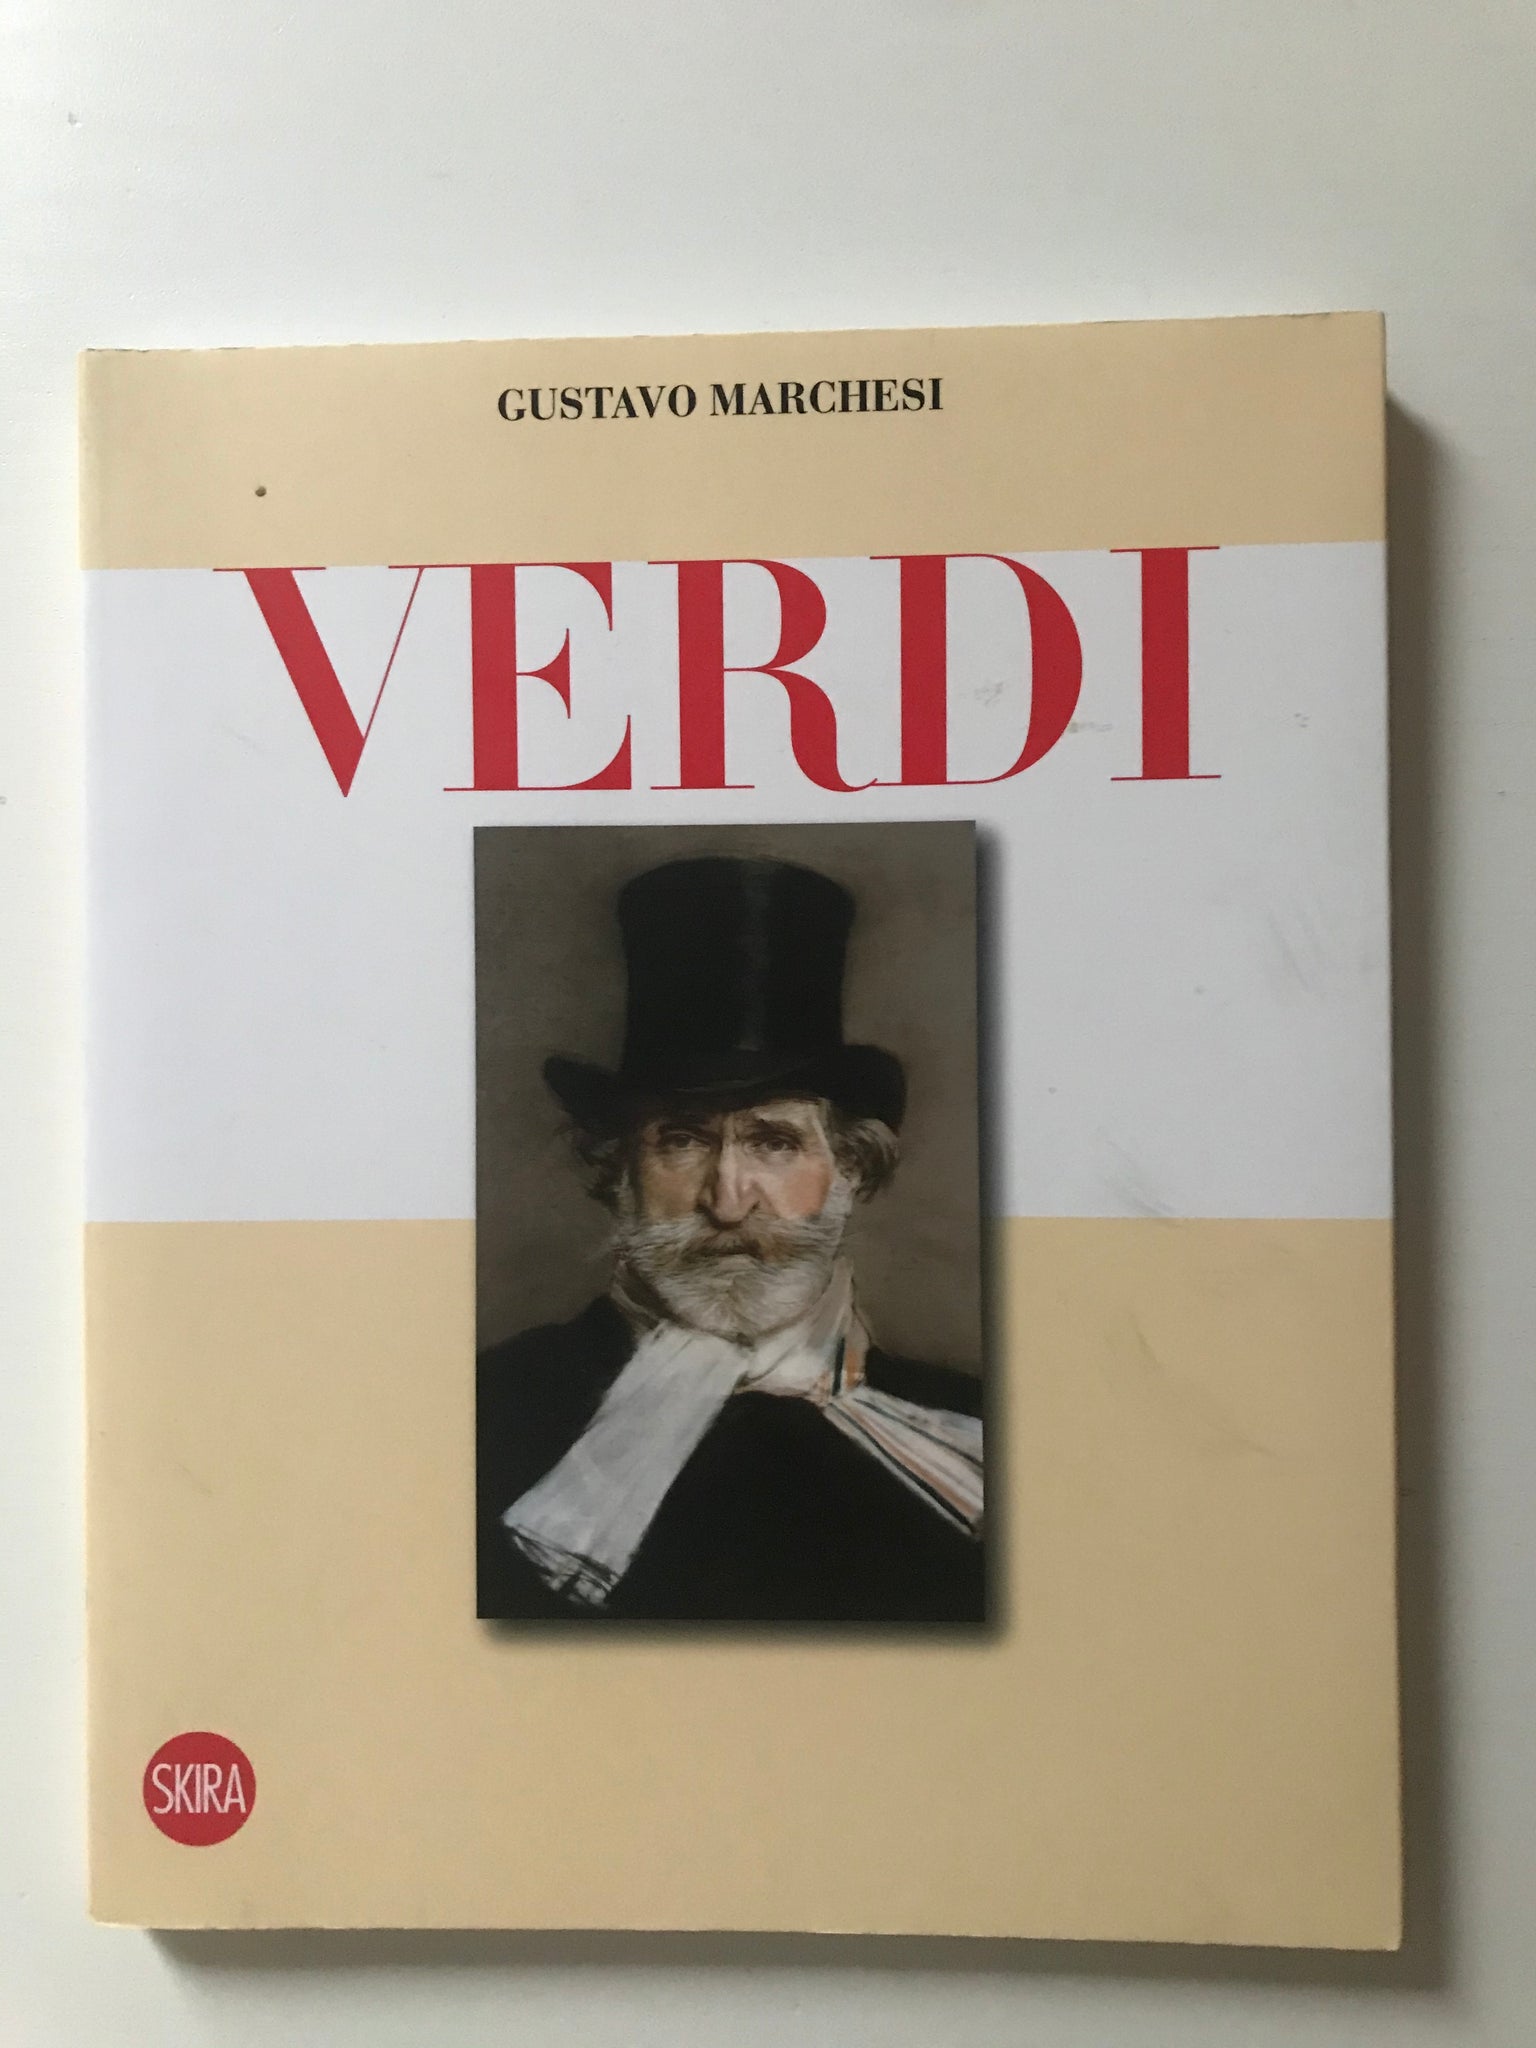 Gustavo Marchesi - Verdi